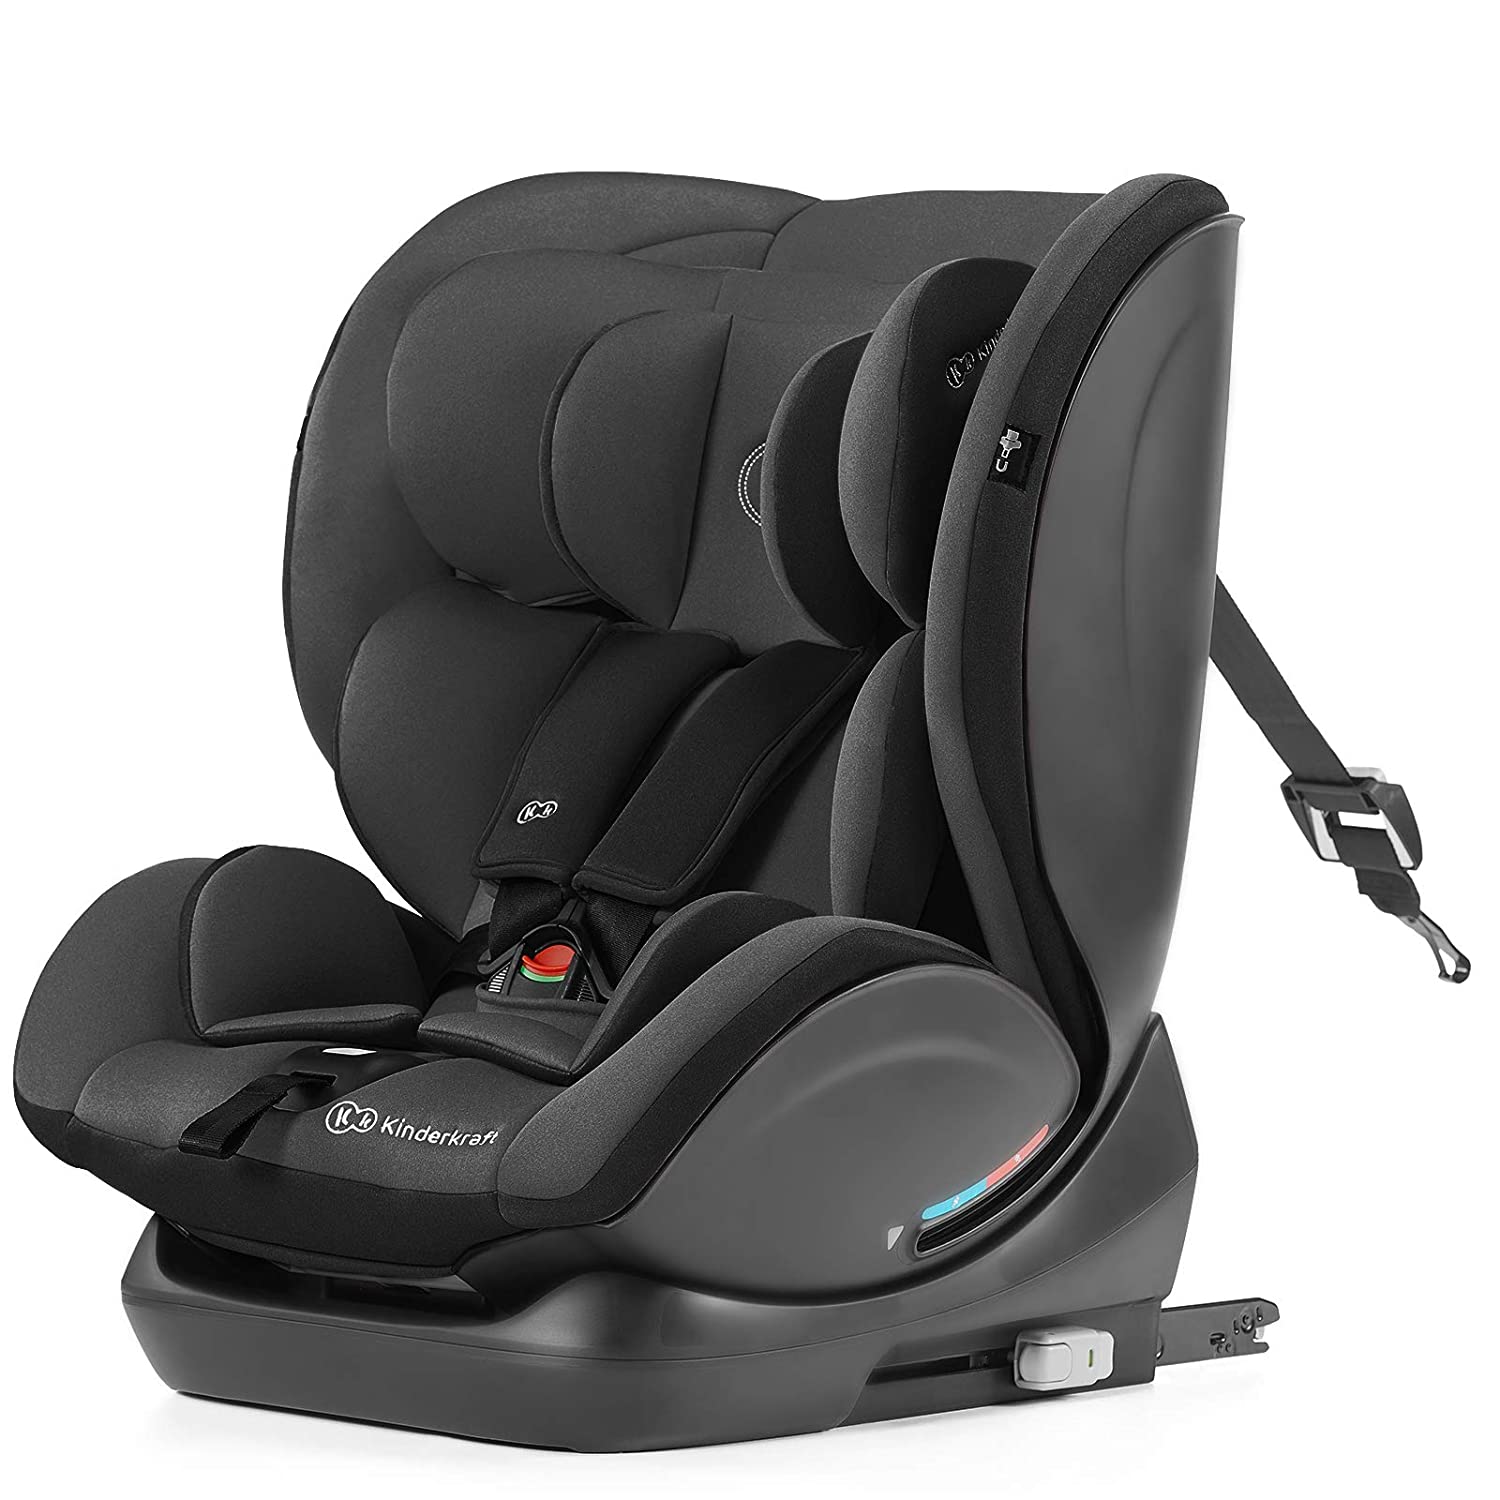 Kinderkraft MYWAY Child Car Seat, Child Car Seat, Child Seat with Isofix, Top Tether Reclining, Headrest Adjustment, Group 0+/1/2/3 0-36 kg, RWF 0-18 kg, INTERTEK ECE R44/04, Grey